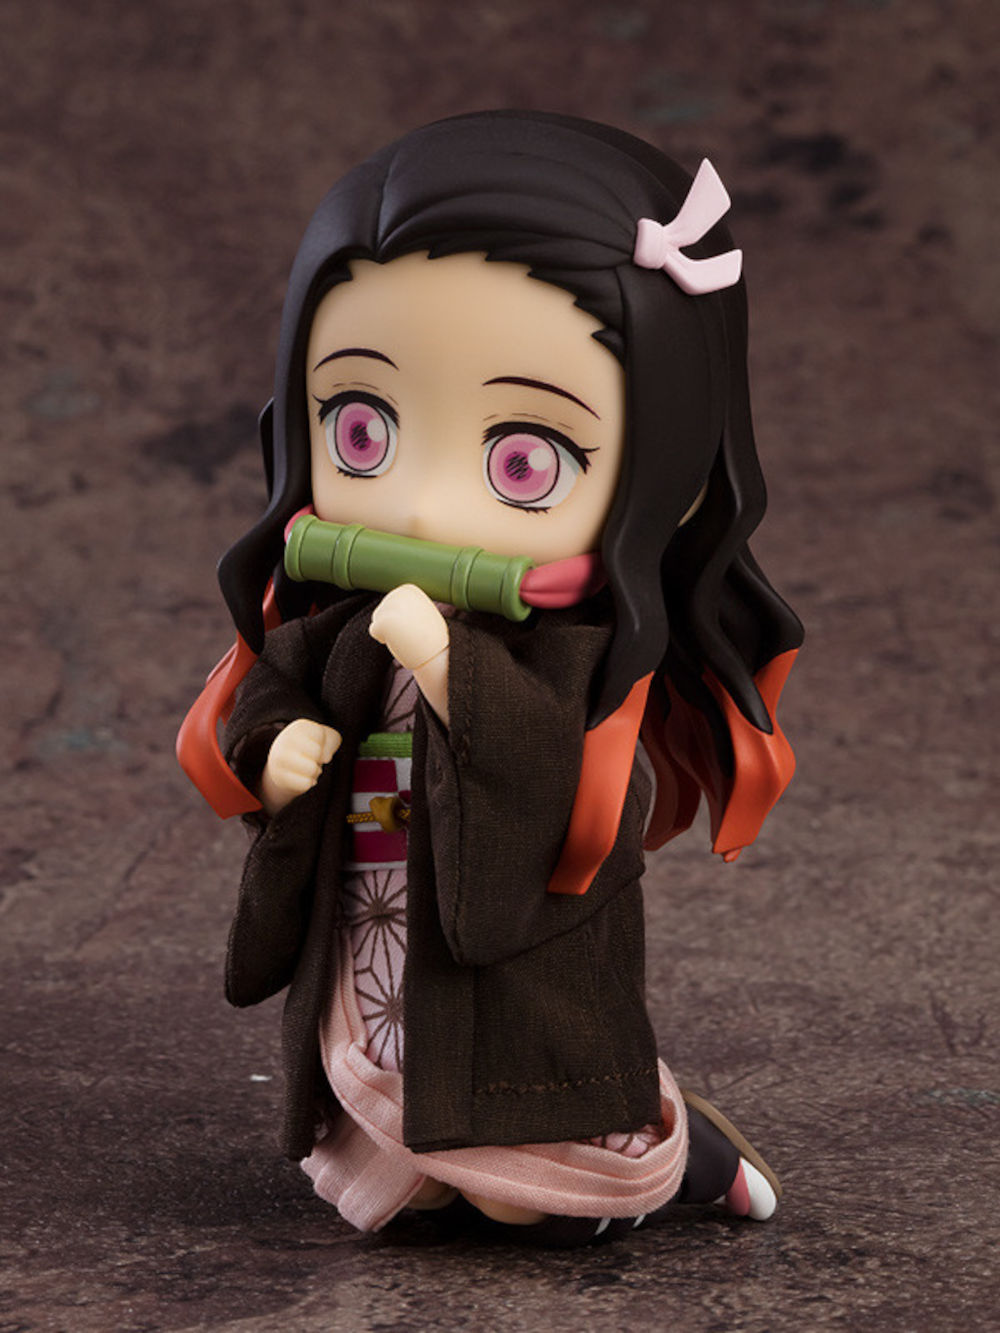 Nezuko de Kimetsu no Yaiba tendrá una figura Nendoroid tipo muñeca